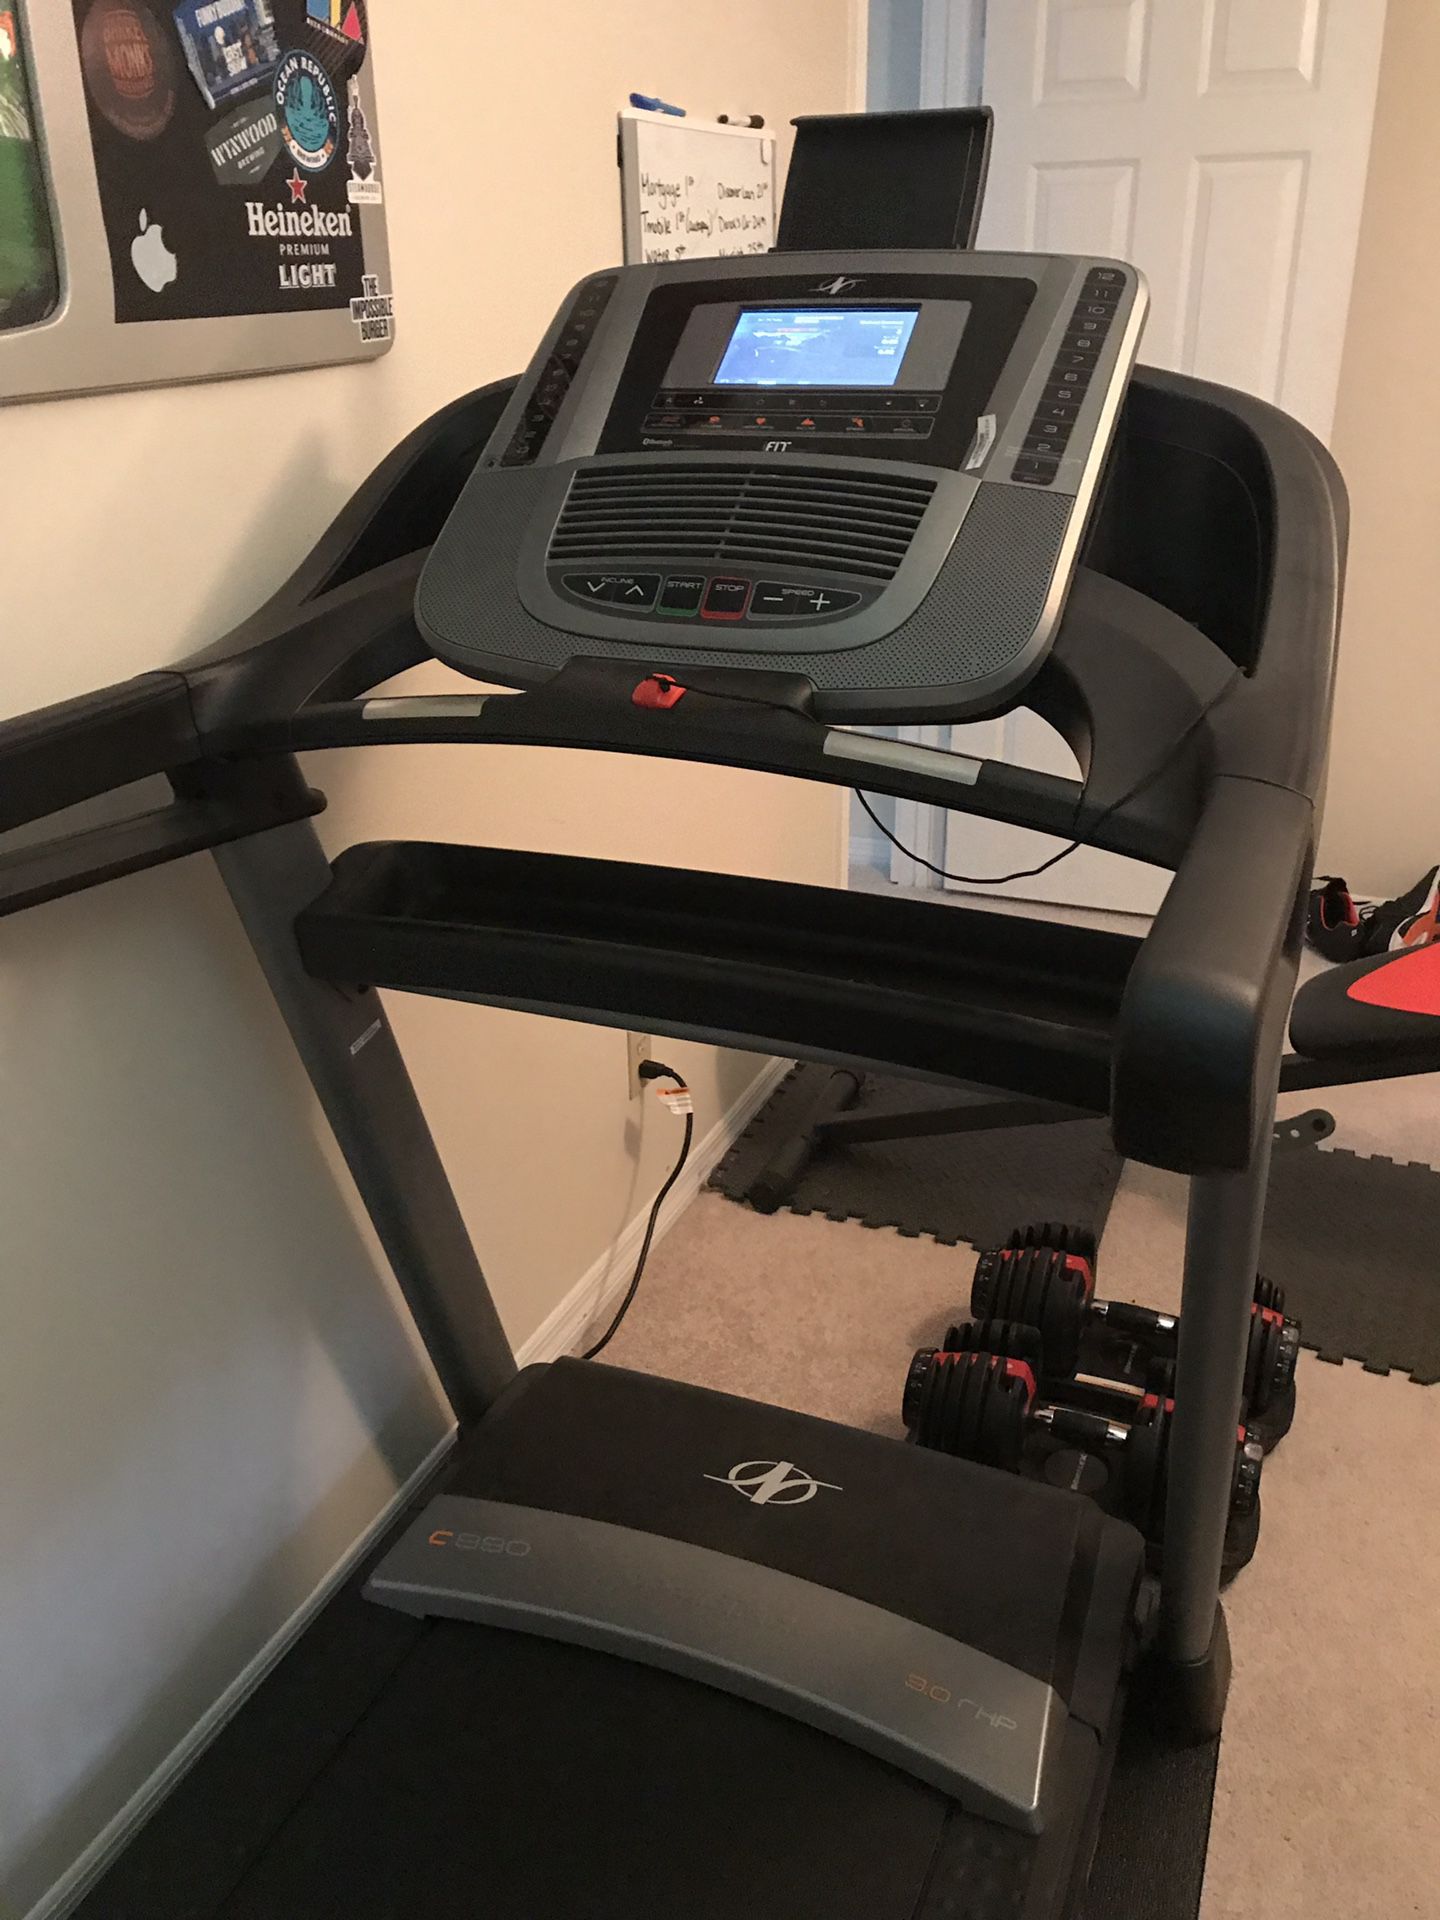 Nordic Track treadmill C990 3.0 RHP